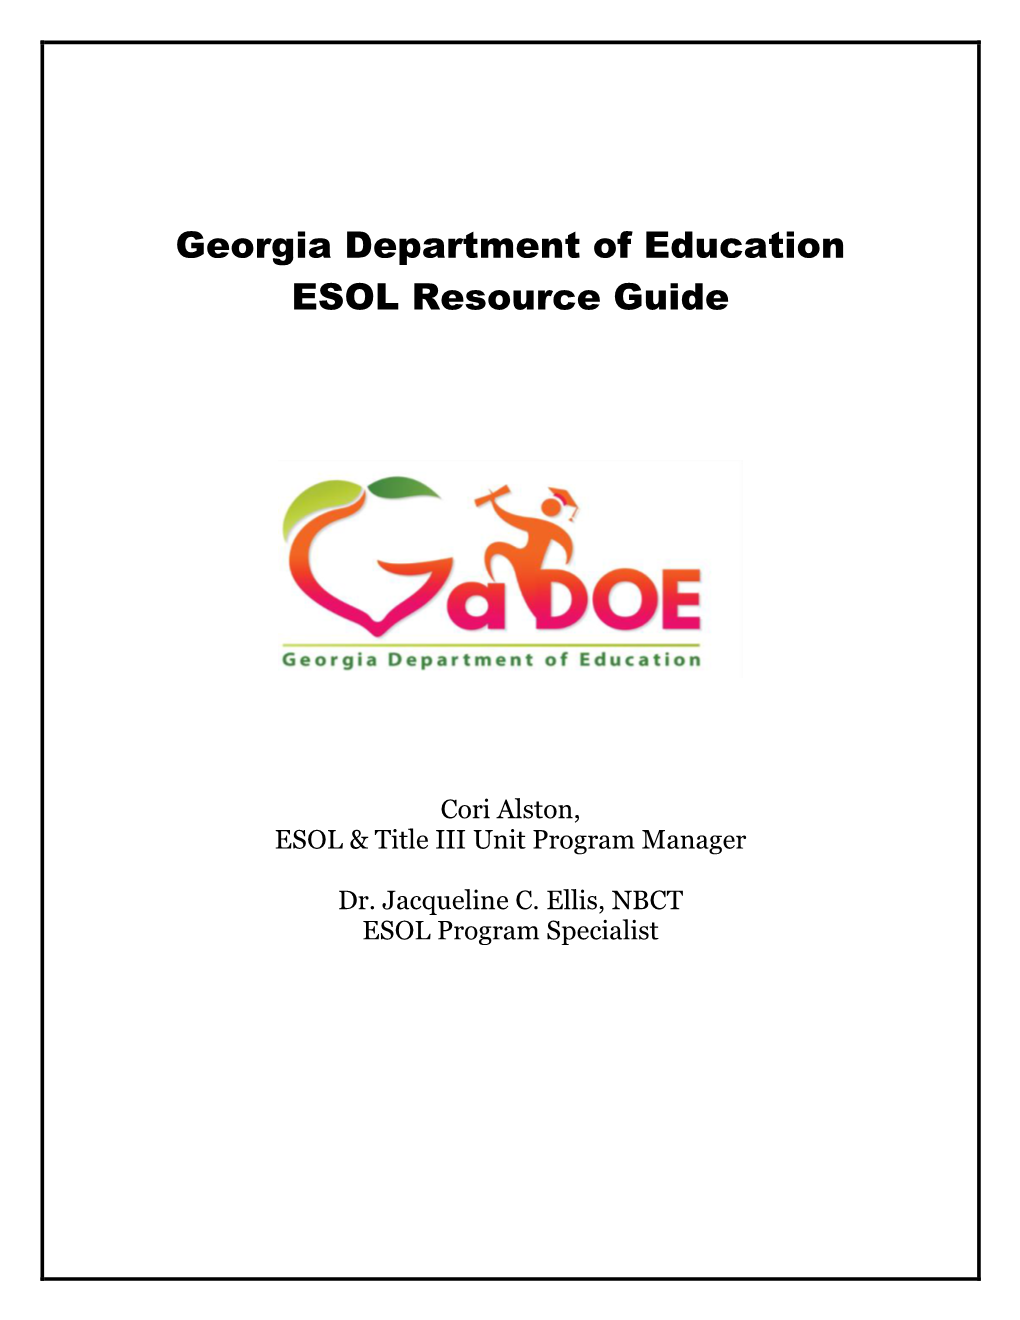 Georgia Department of Education ESOL Resource Guide